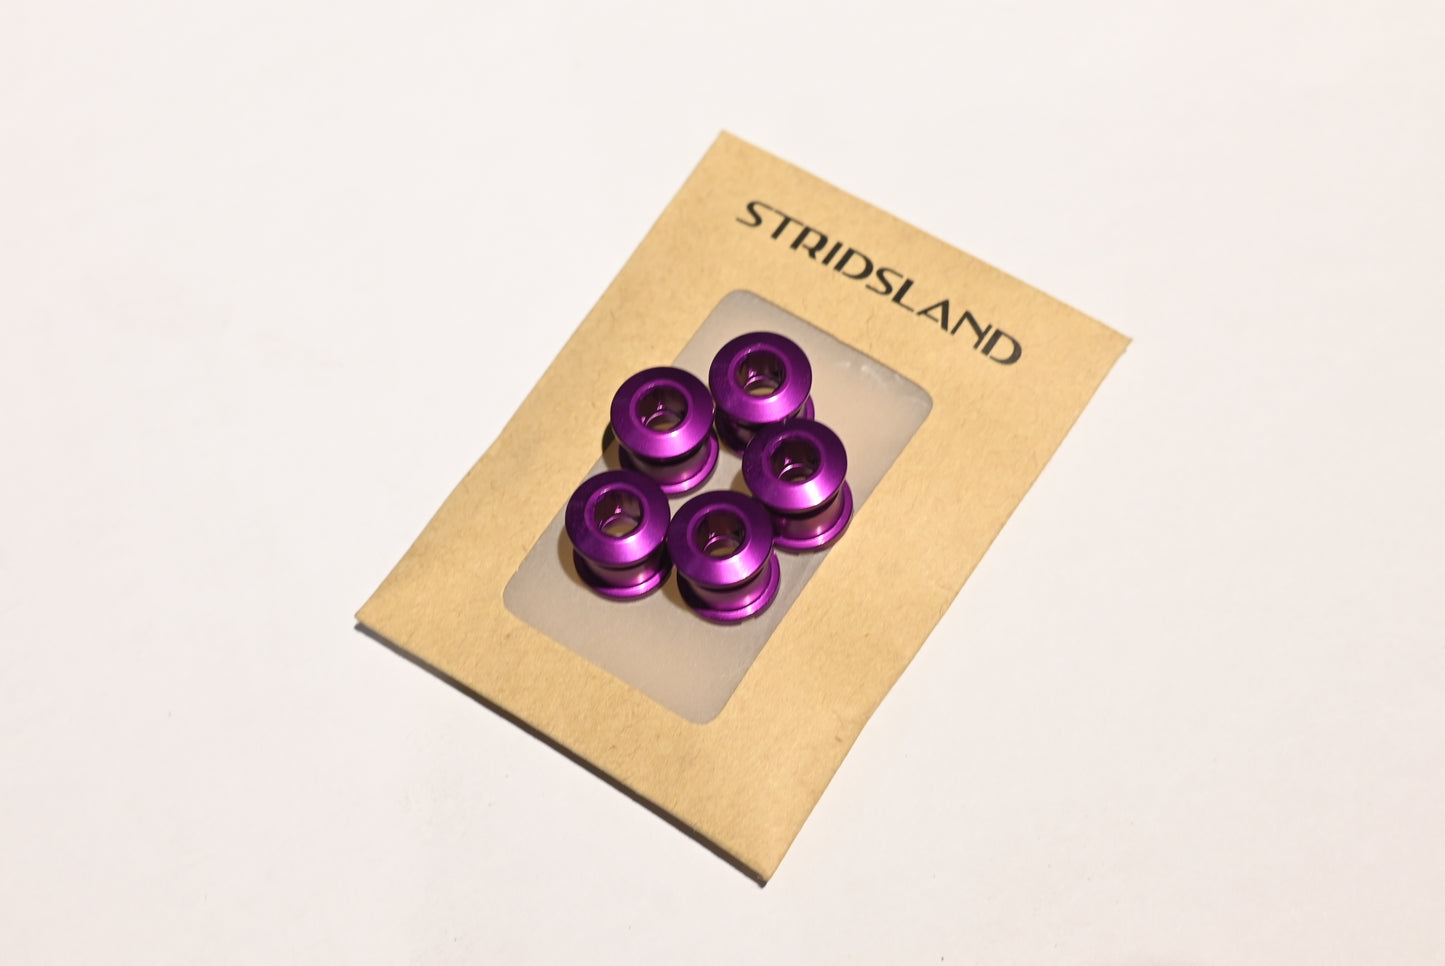 Stridsland - Chainring Bolts (purple)